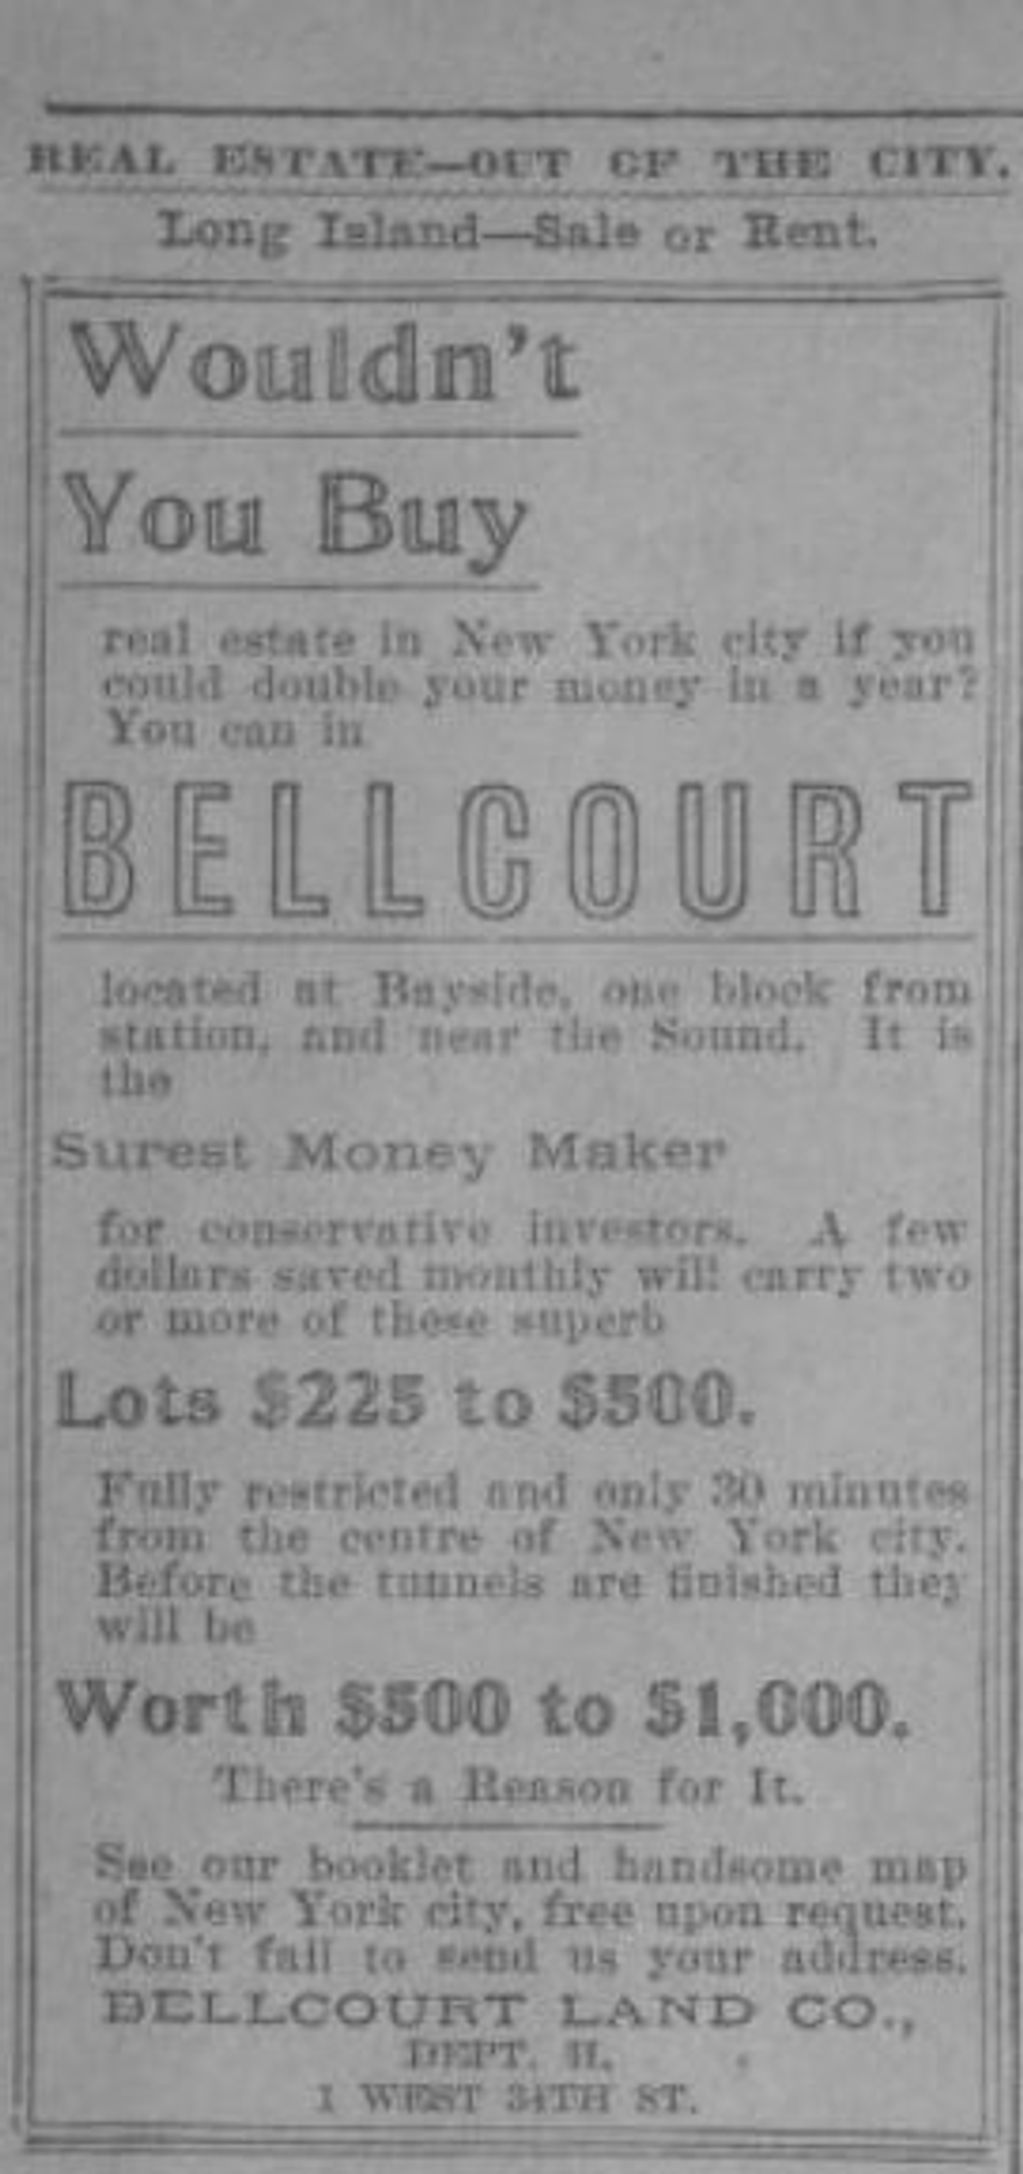 March 7, 1906
New York Herald